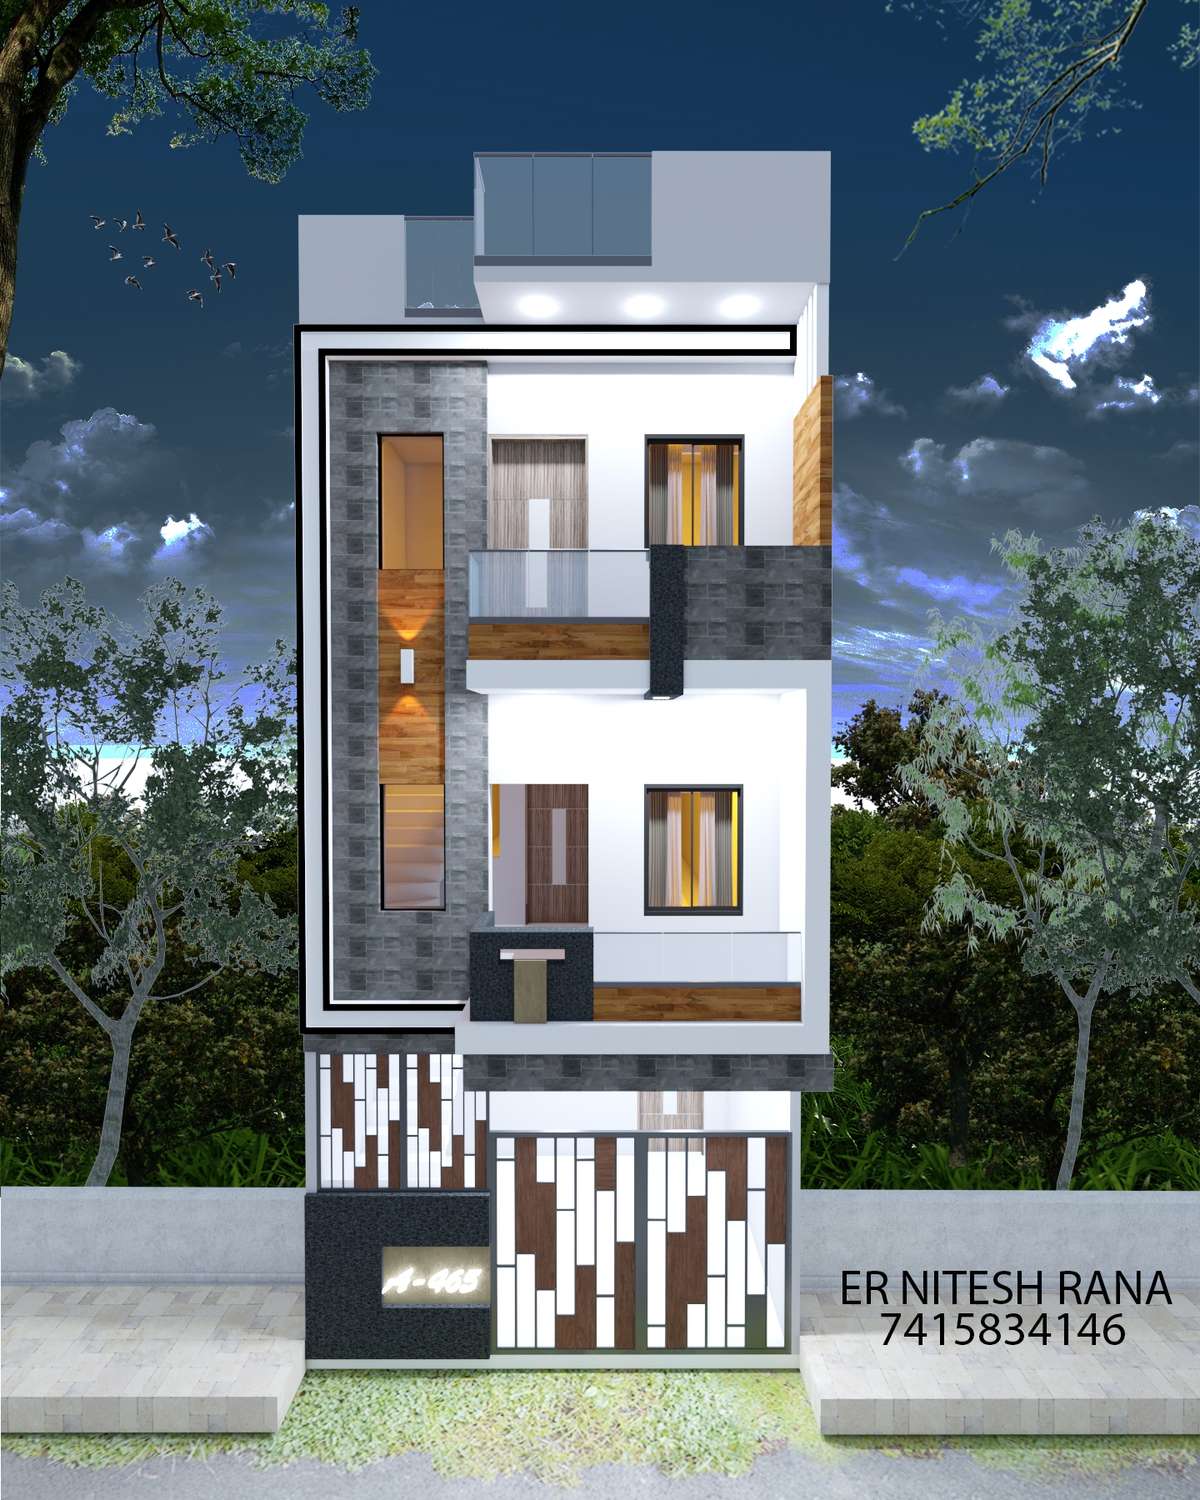 Designs by Civil Engineer Er Nitesh rana, Indore | Kolo